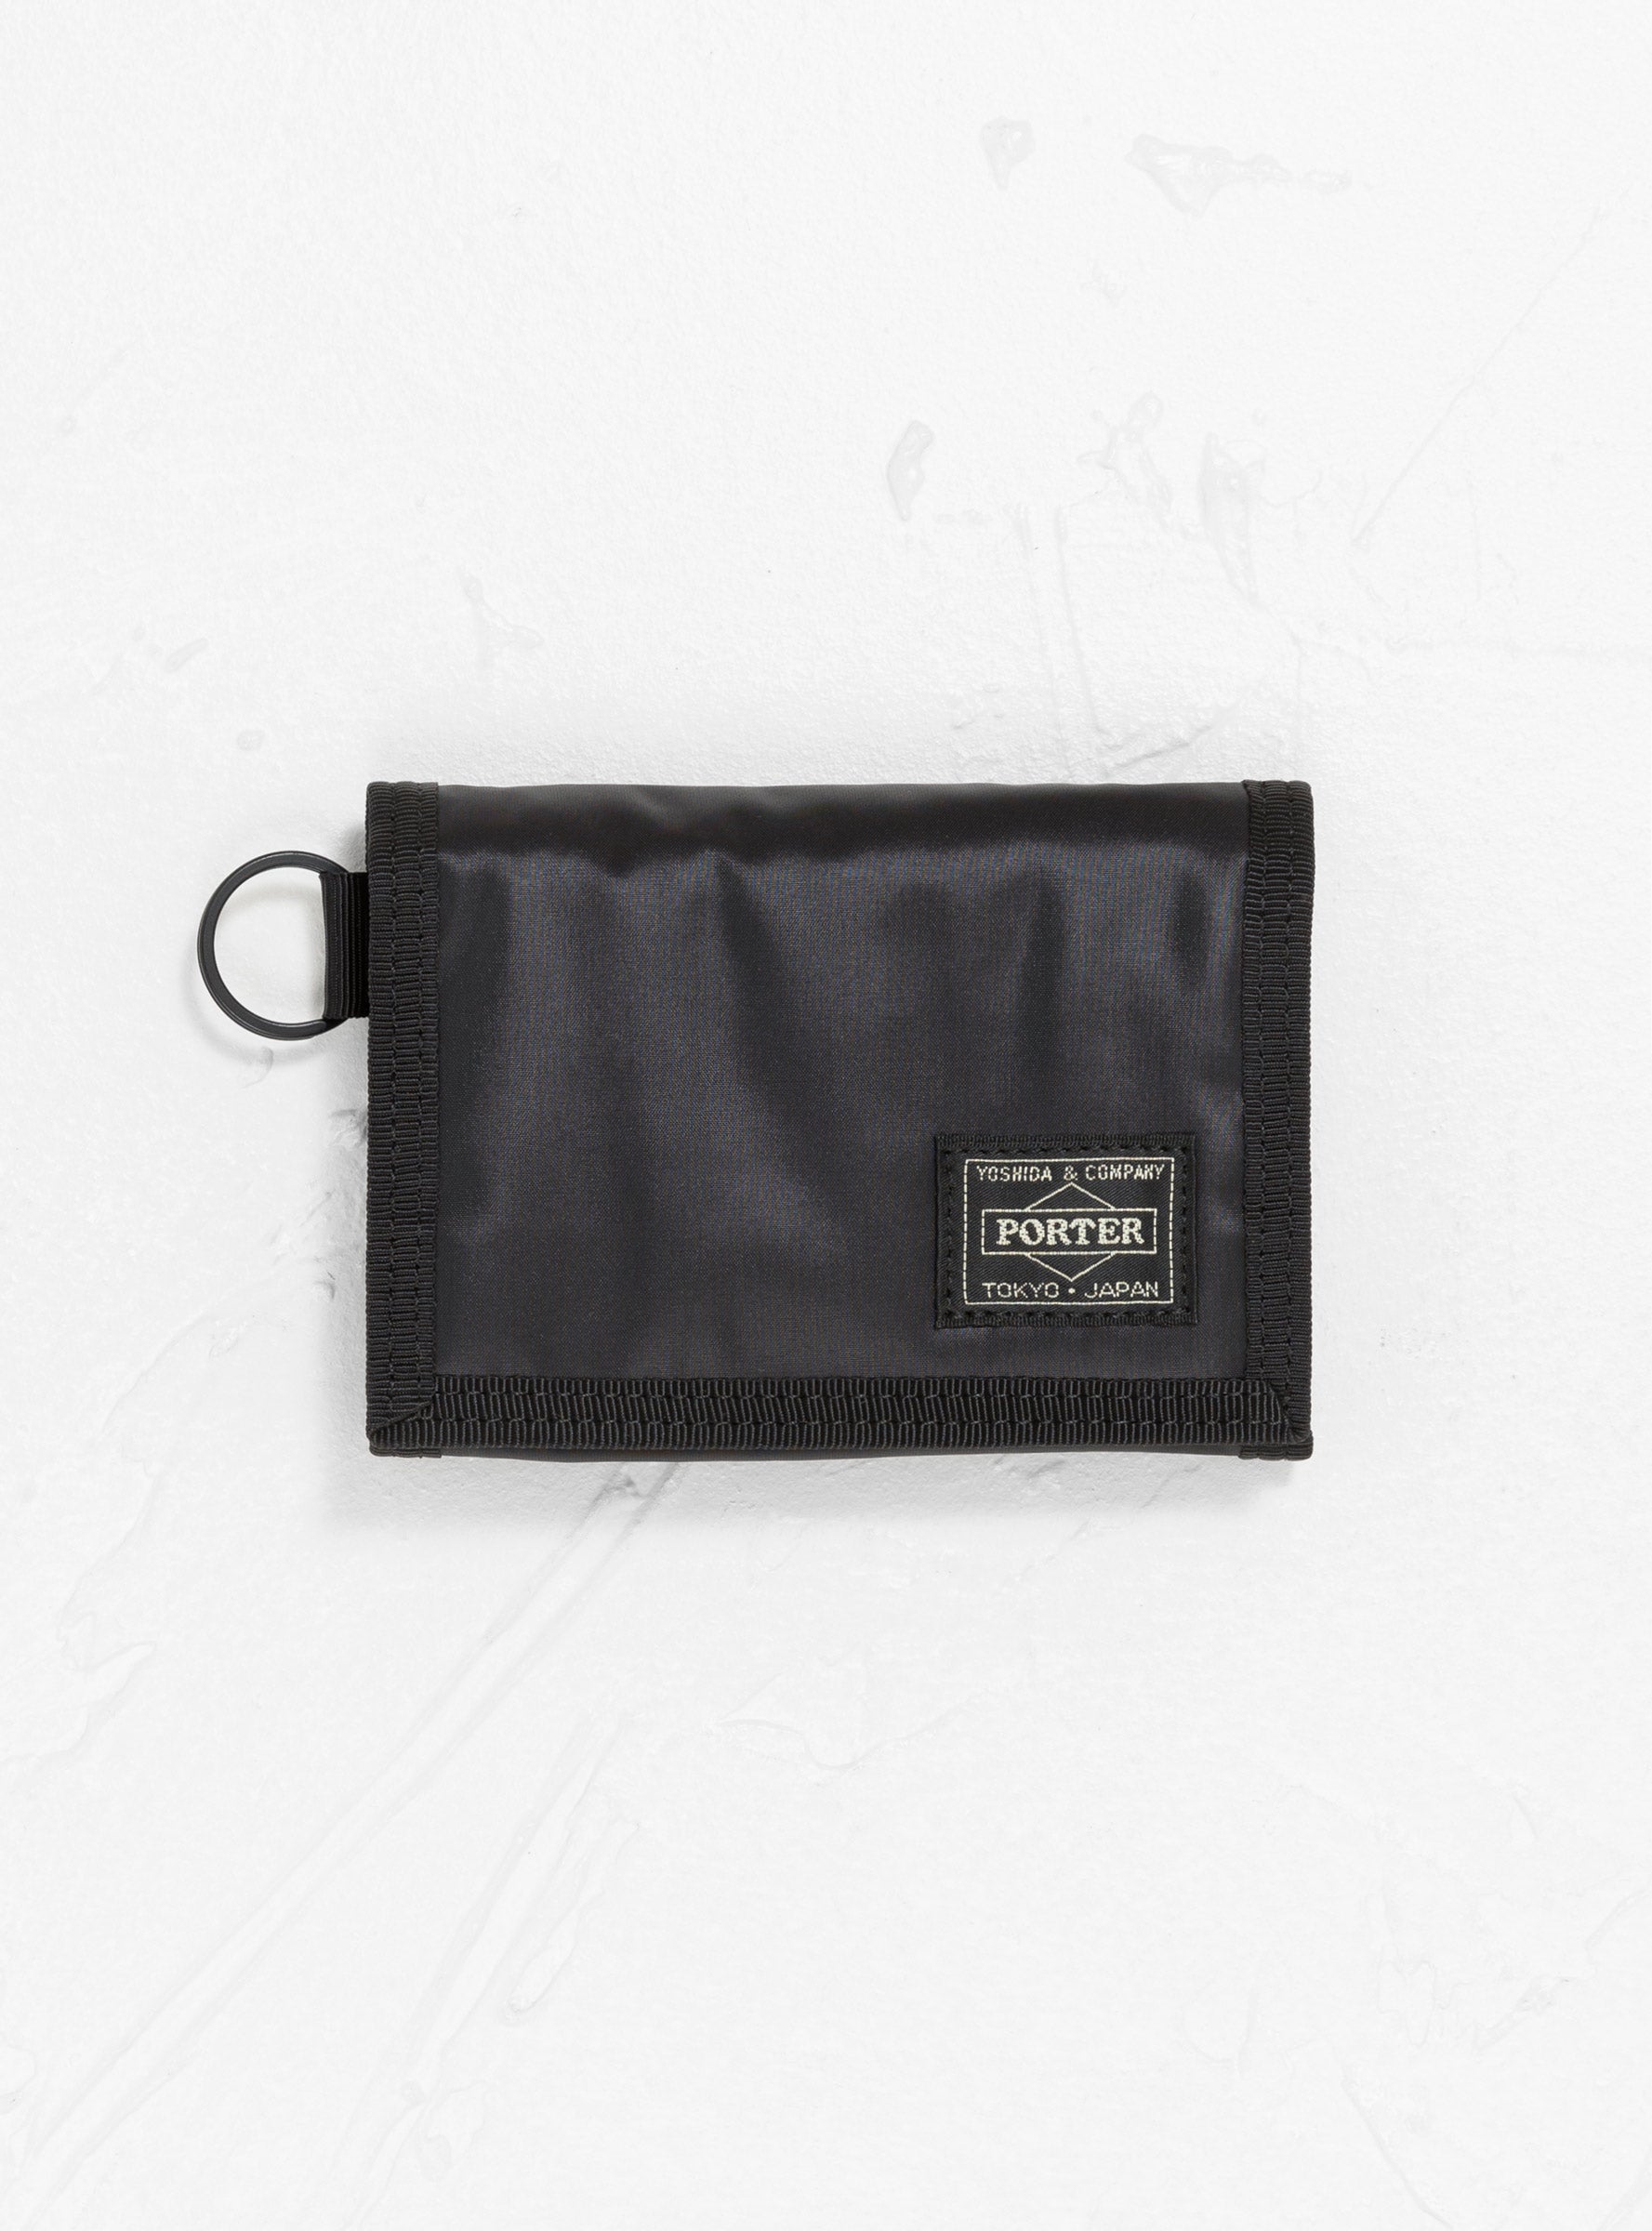  Porter Yoshida & Co. Capsule Wallet Black